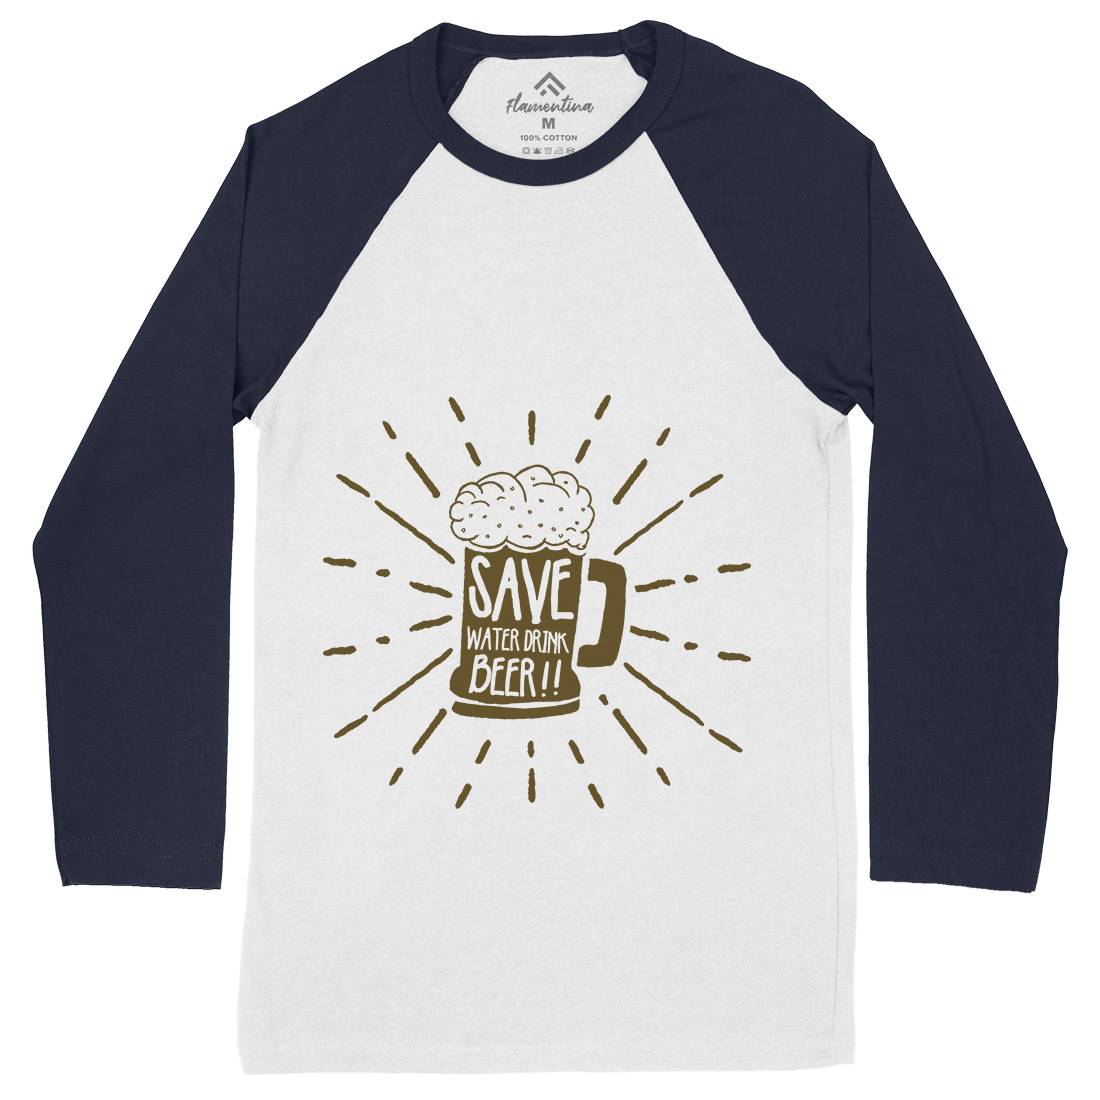 Save Water Mens Long Sleeve Baseball T-Shirt Drinks A368